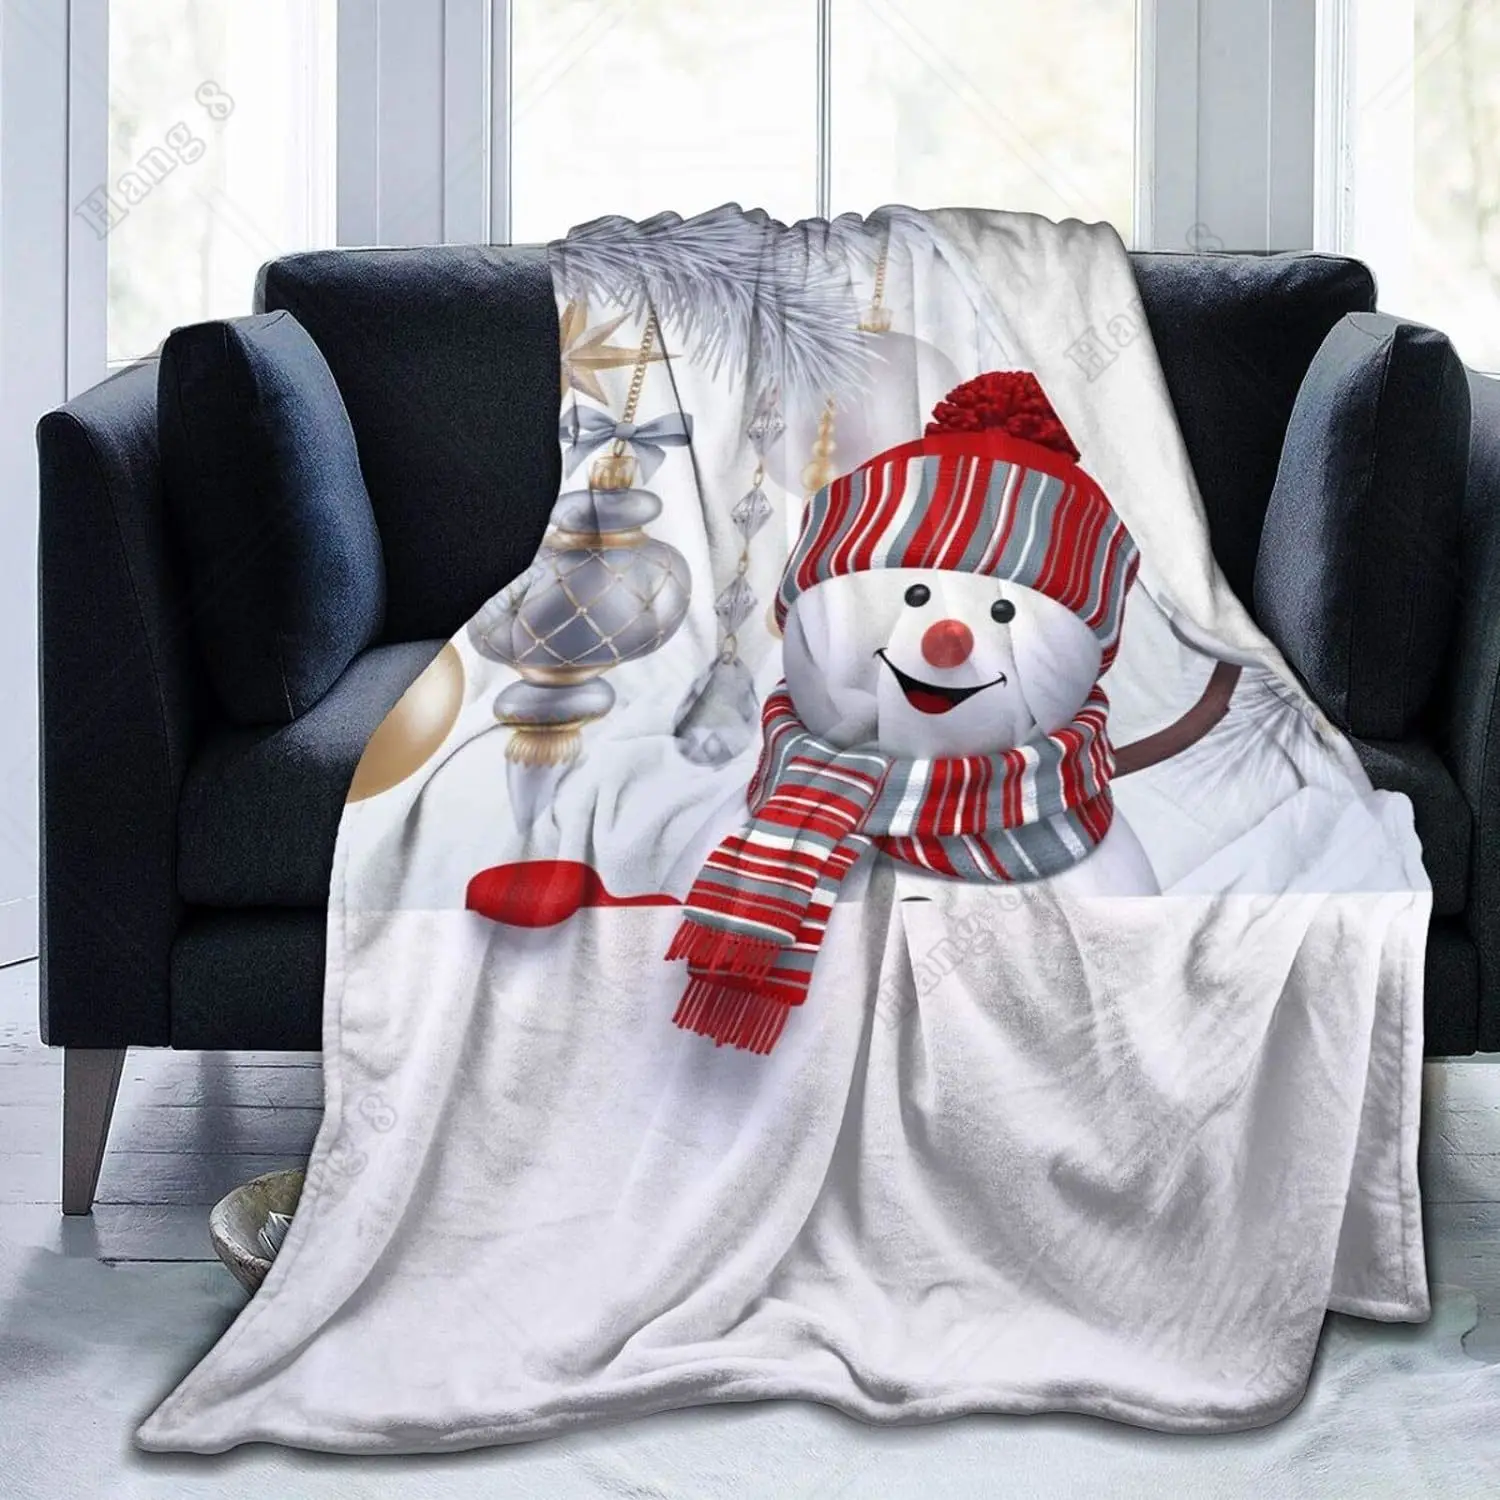 Winter Snowman Waving Hand Soft Throw Blanket All Season Microplush Warm Blankets Lightweight Tufted Fuzzy Flannel Blanket